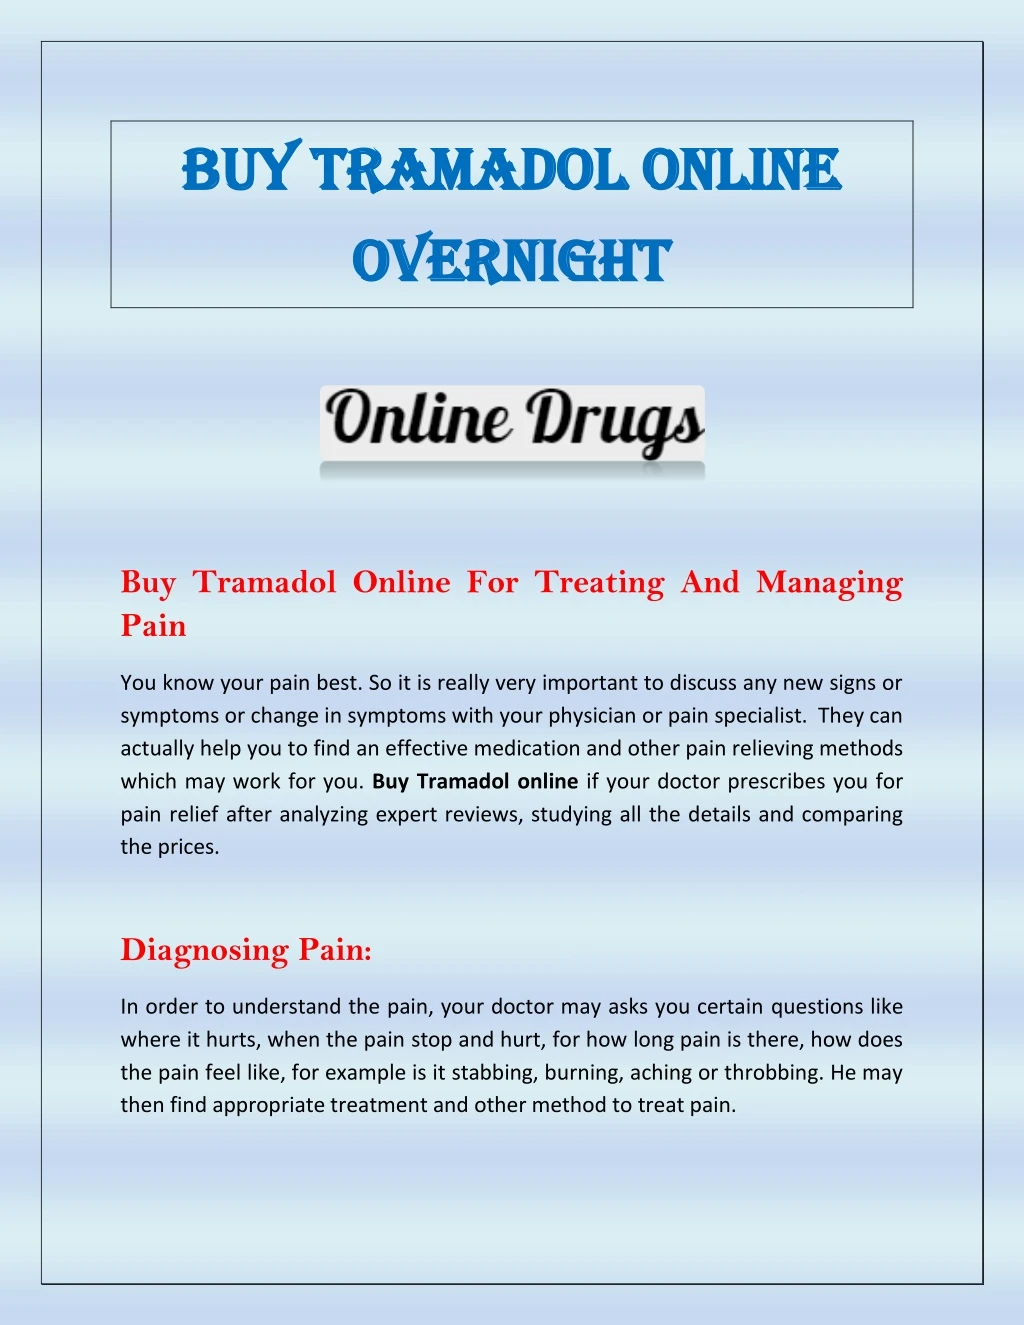 buy tramadol online buy tramadol online overnight